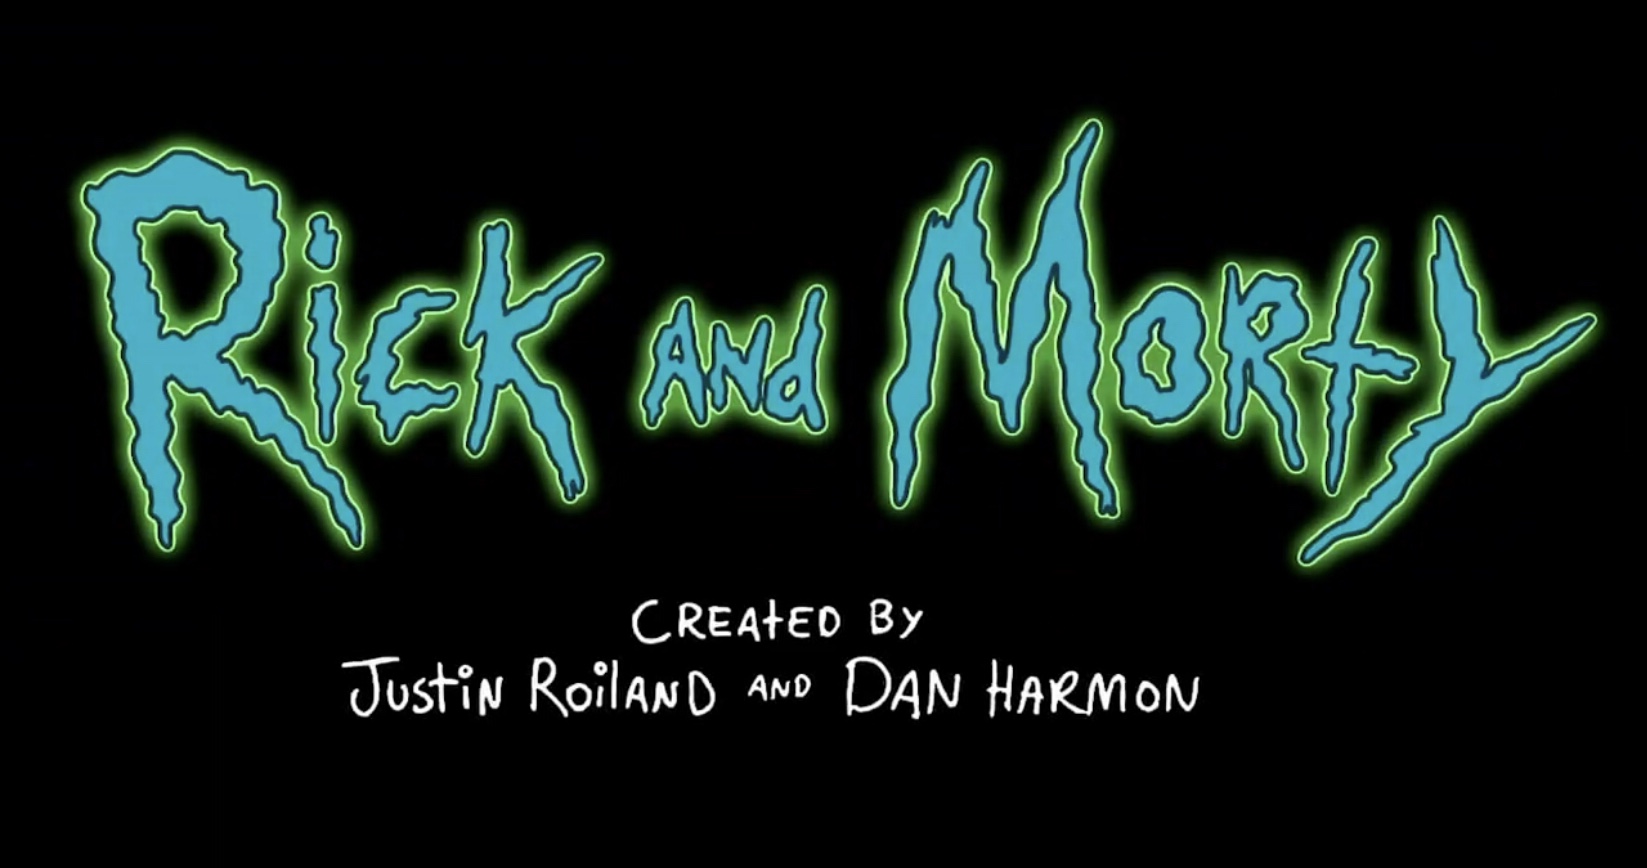 Rick and Morty (season 7) - Wikipedia